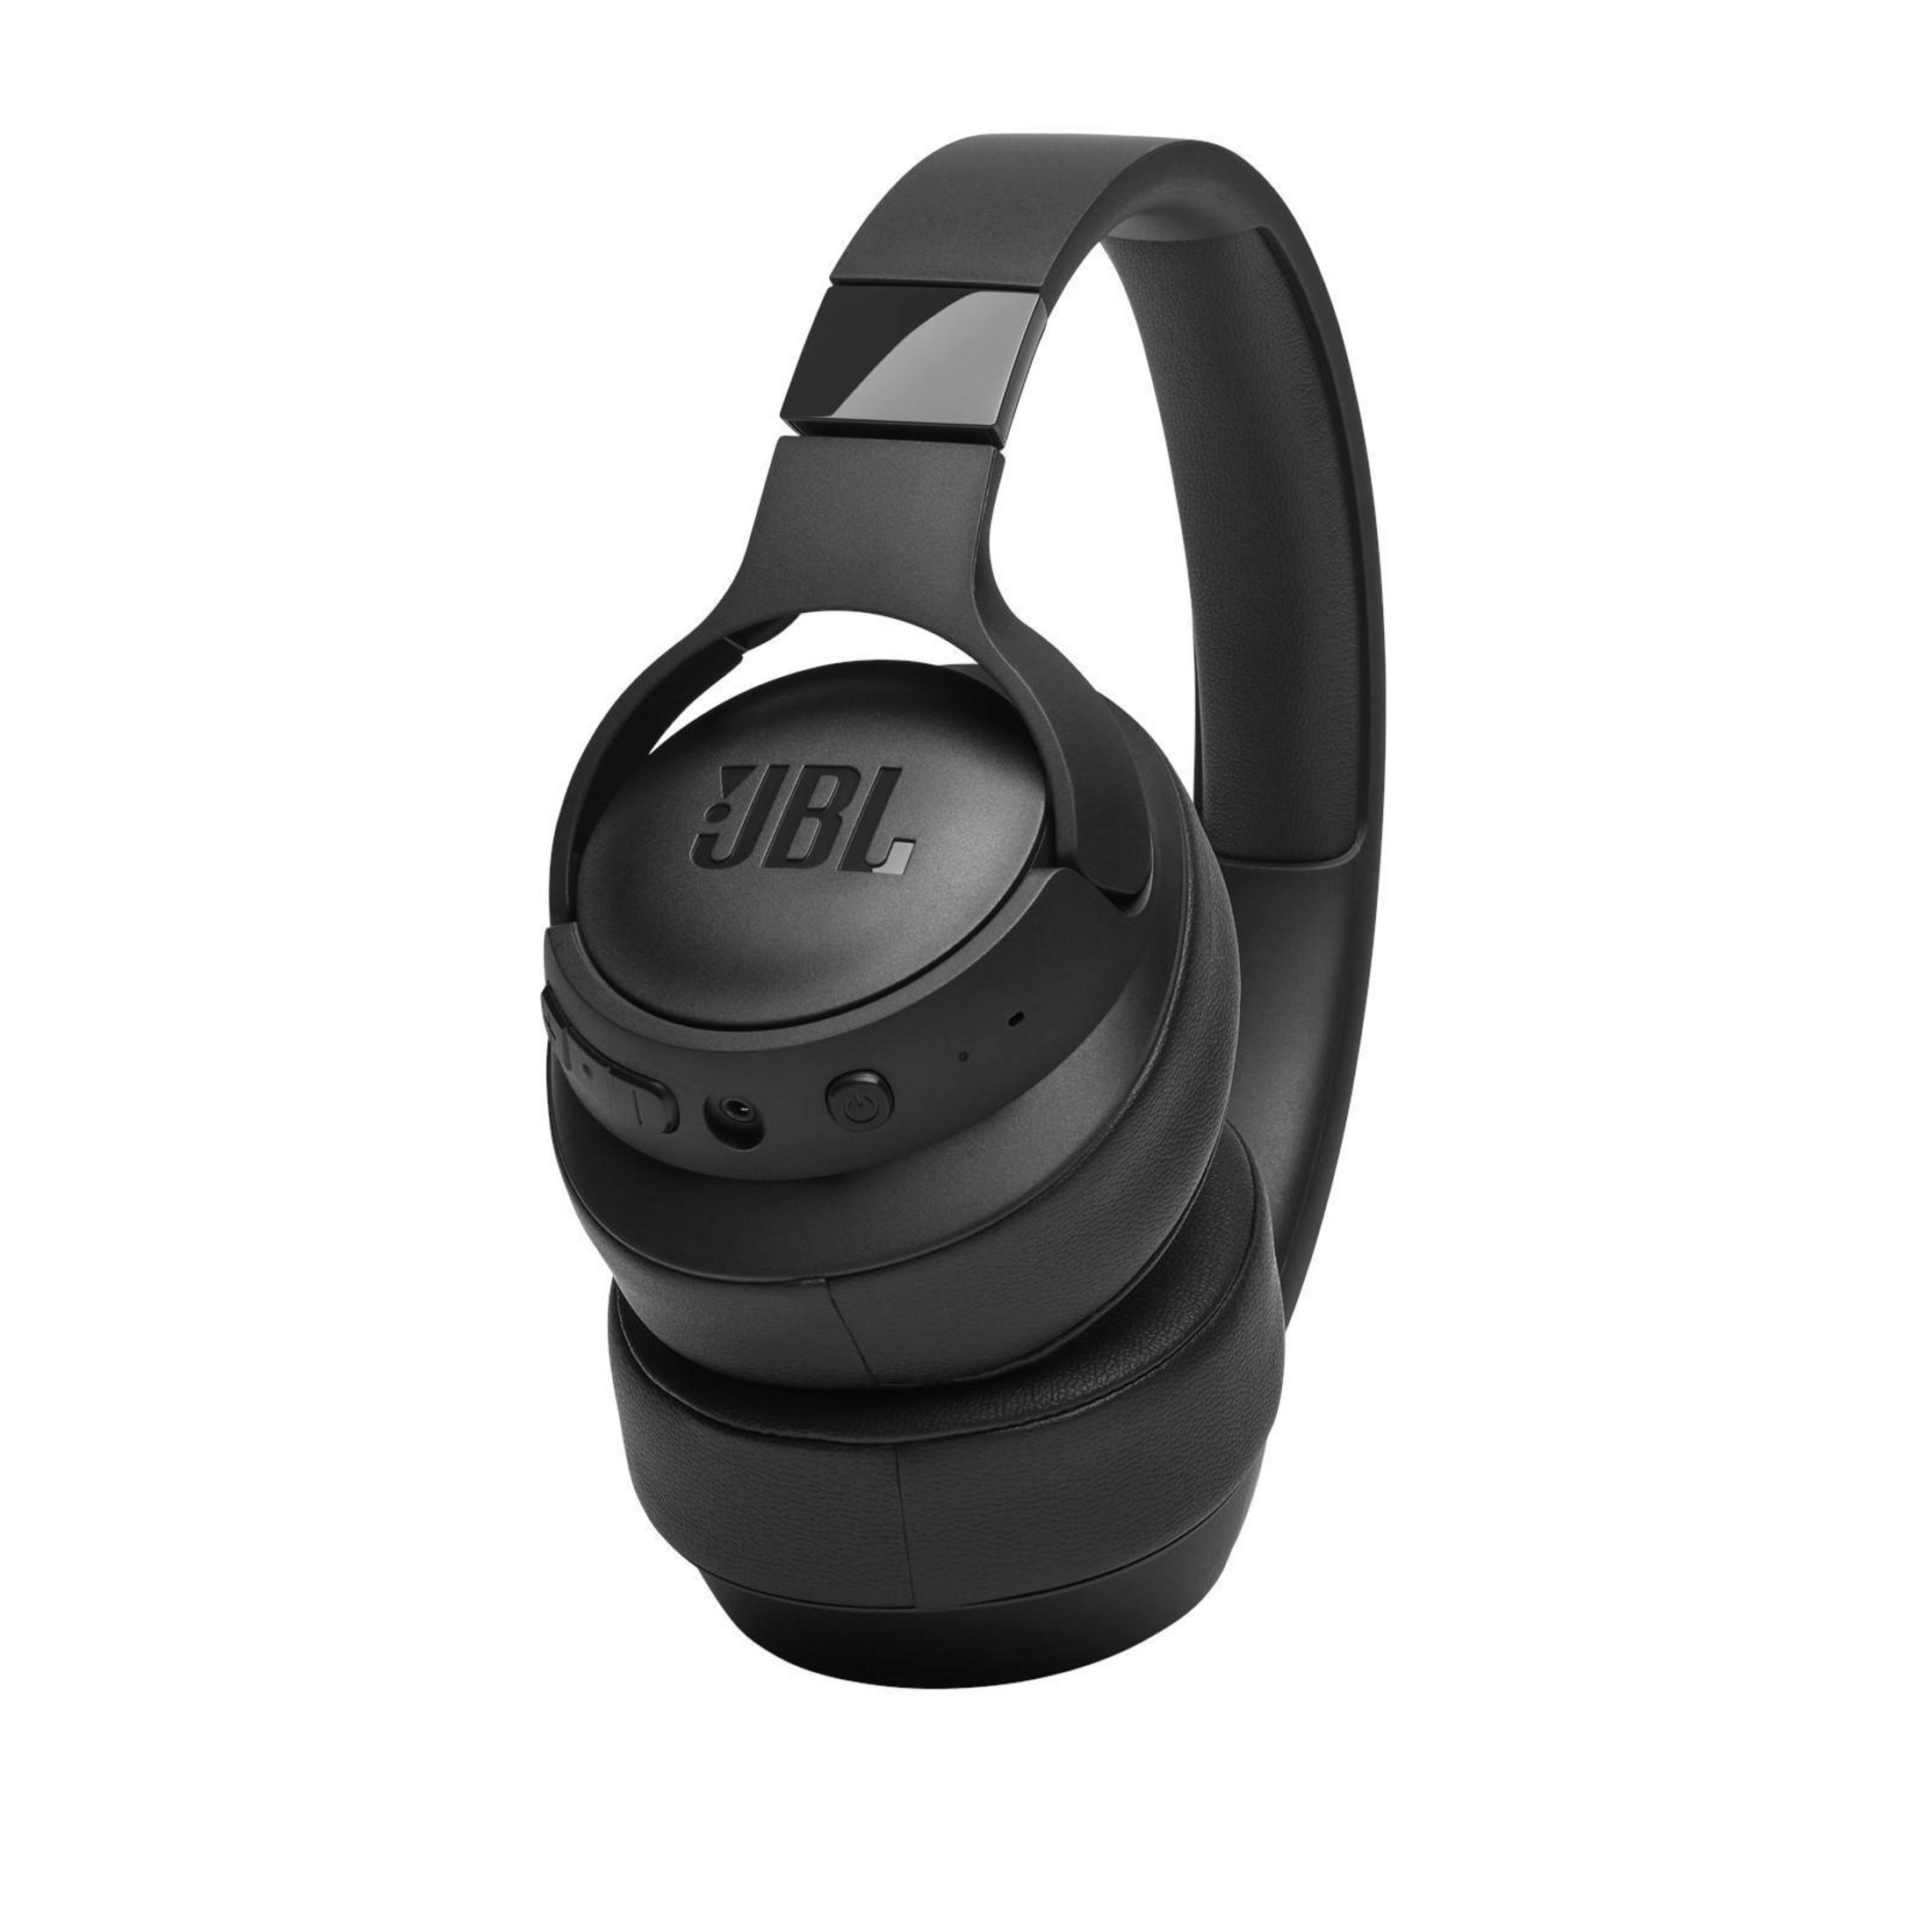 T BT JBL BLK, Kopfhörer Over-ear 710 Schwarz Bluetooth